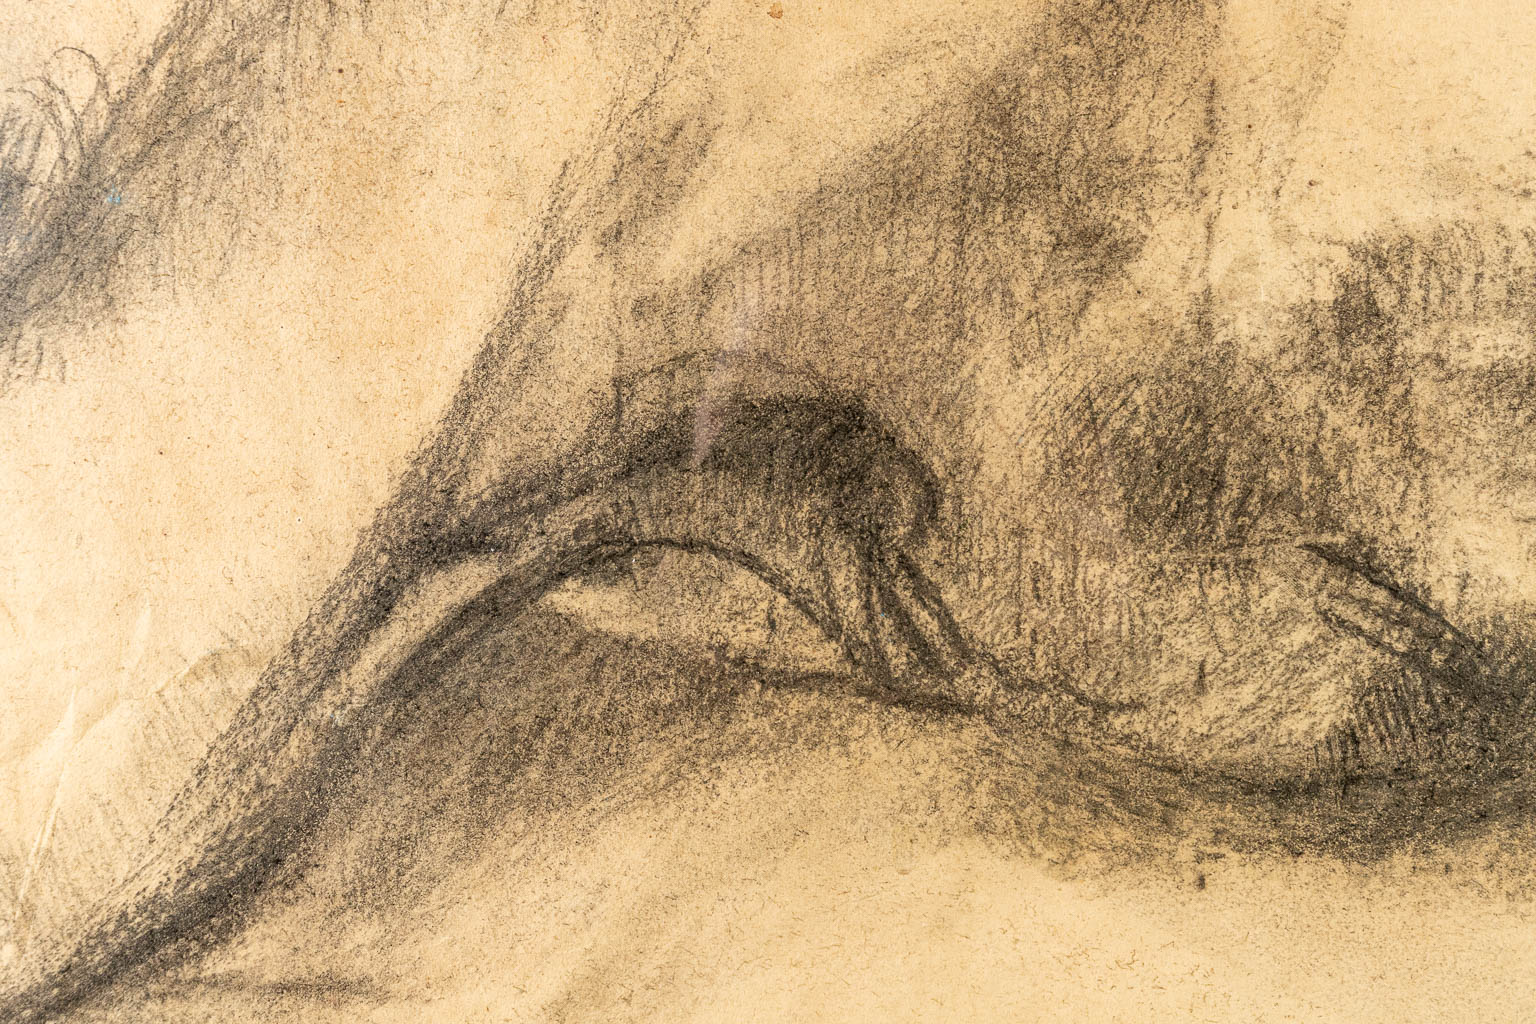 Rik DEVOLDER (XX) 'Naked figurine' a drawing, pencil on paper. (113 x 72 cm)